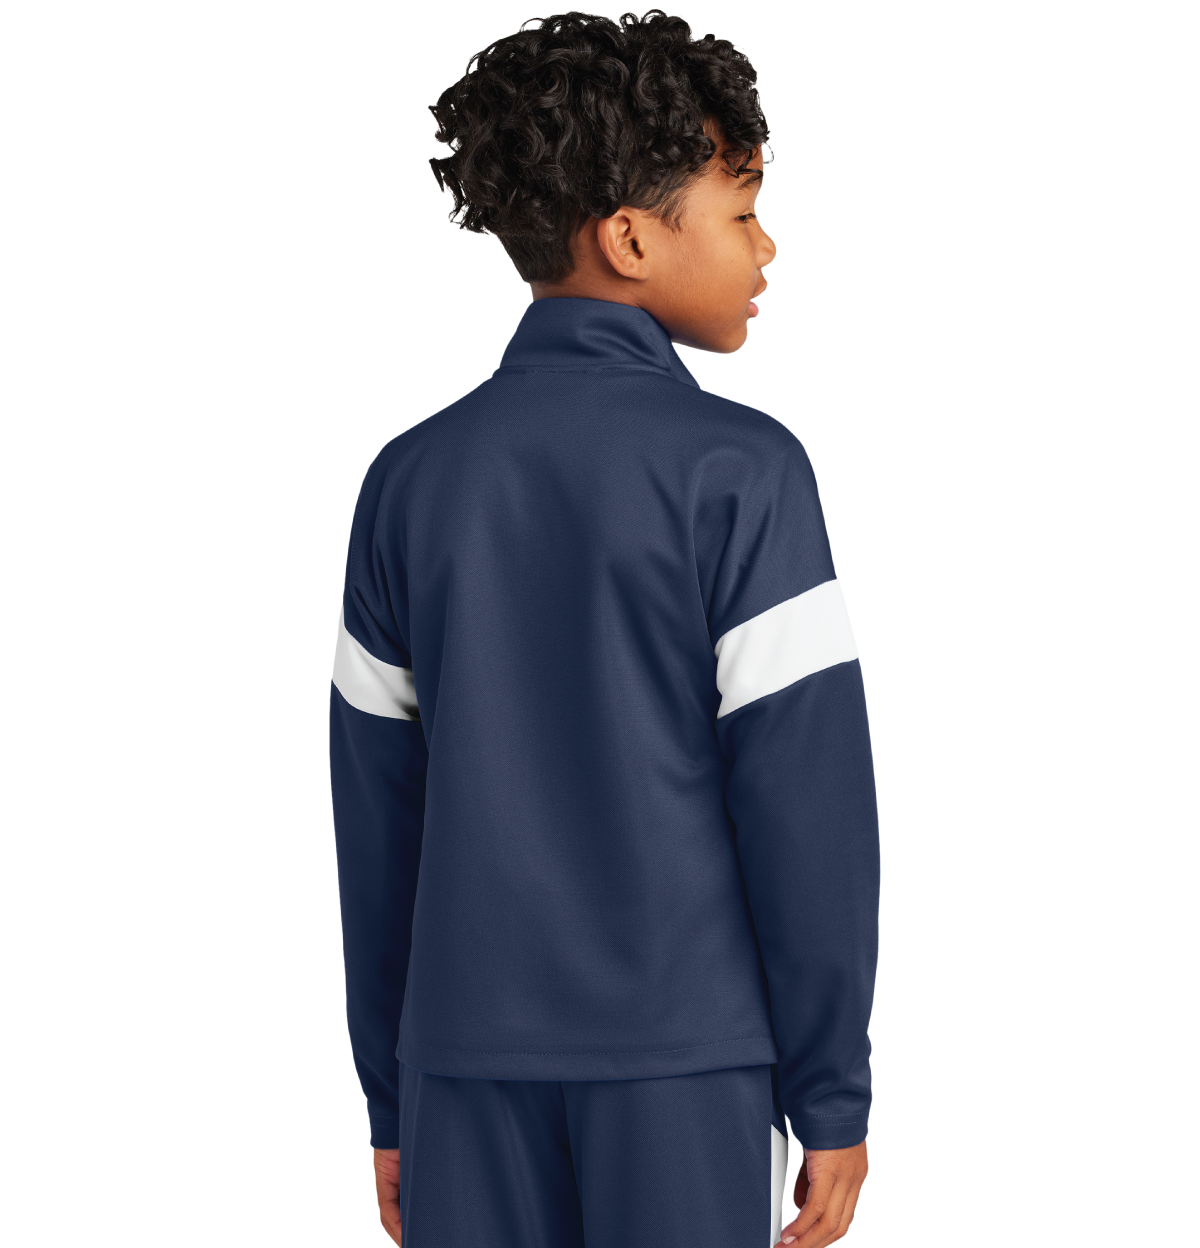 Full Zip Youth Jacket Sport-Tek: Simsbury Soccer Club